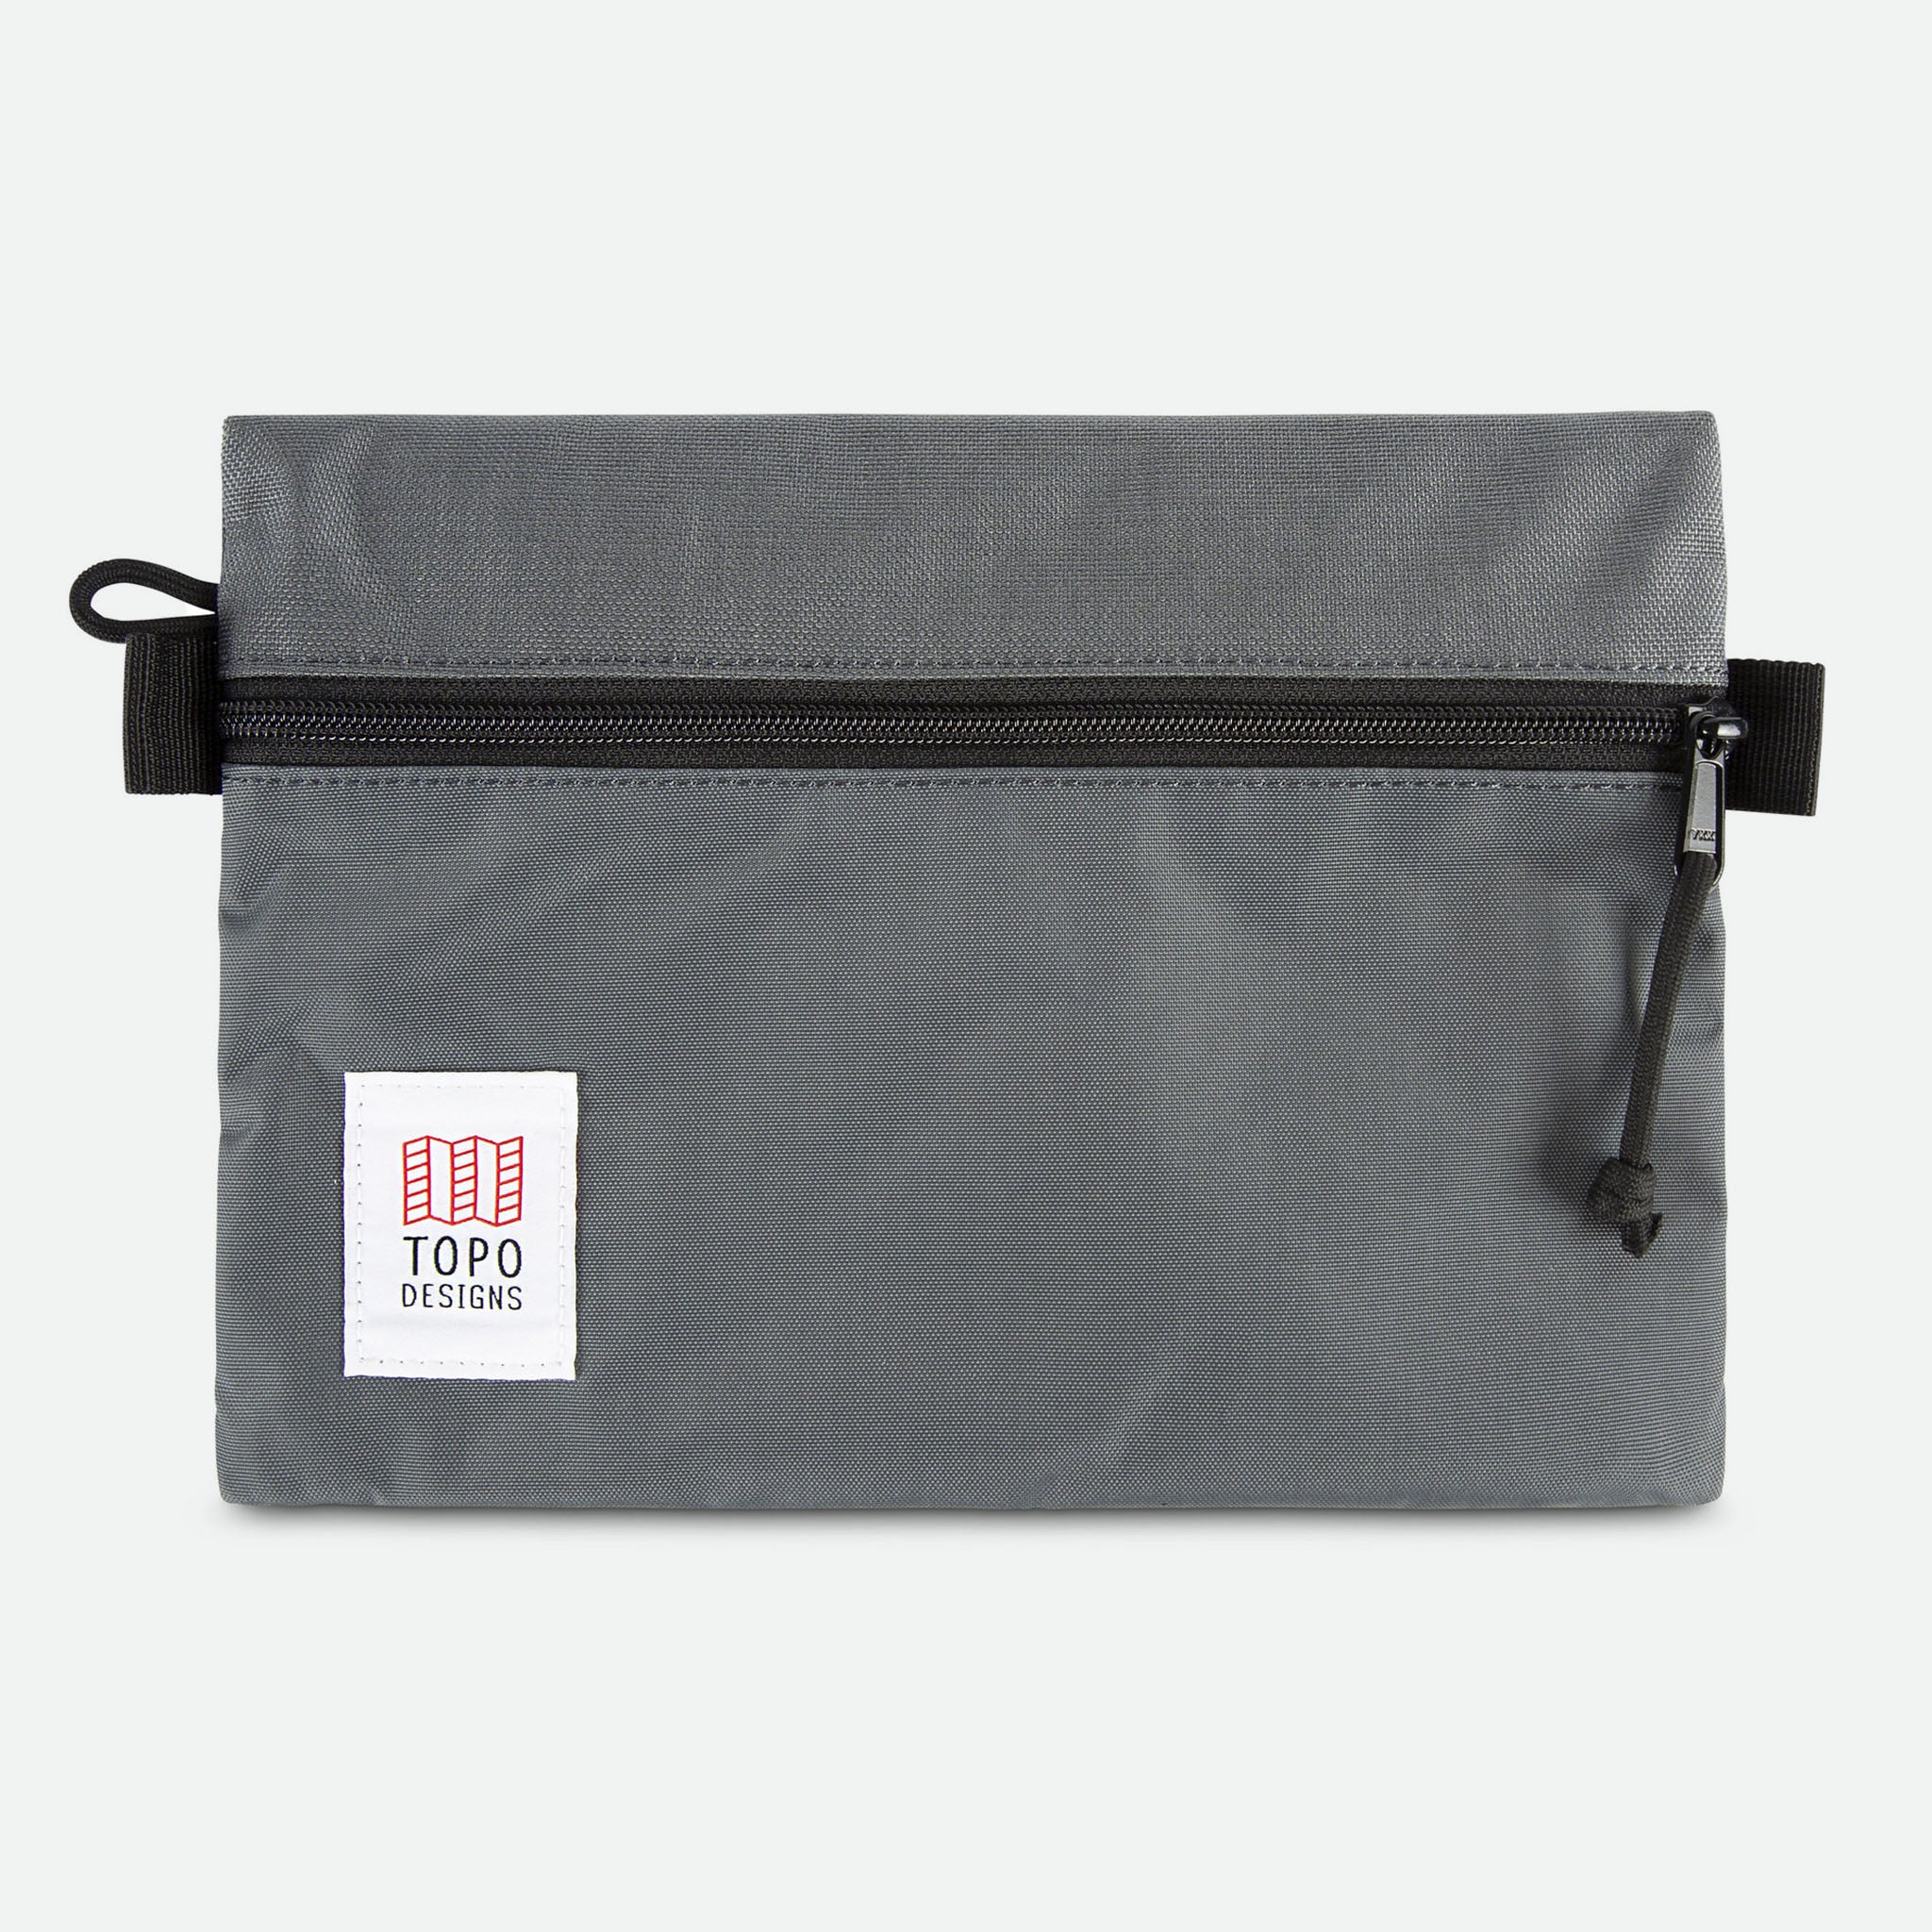 Topo Designs Accessory Bag Medium Grey